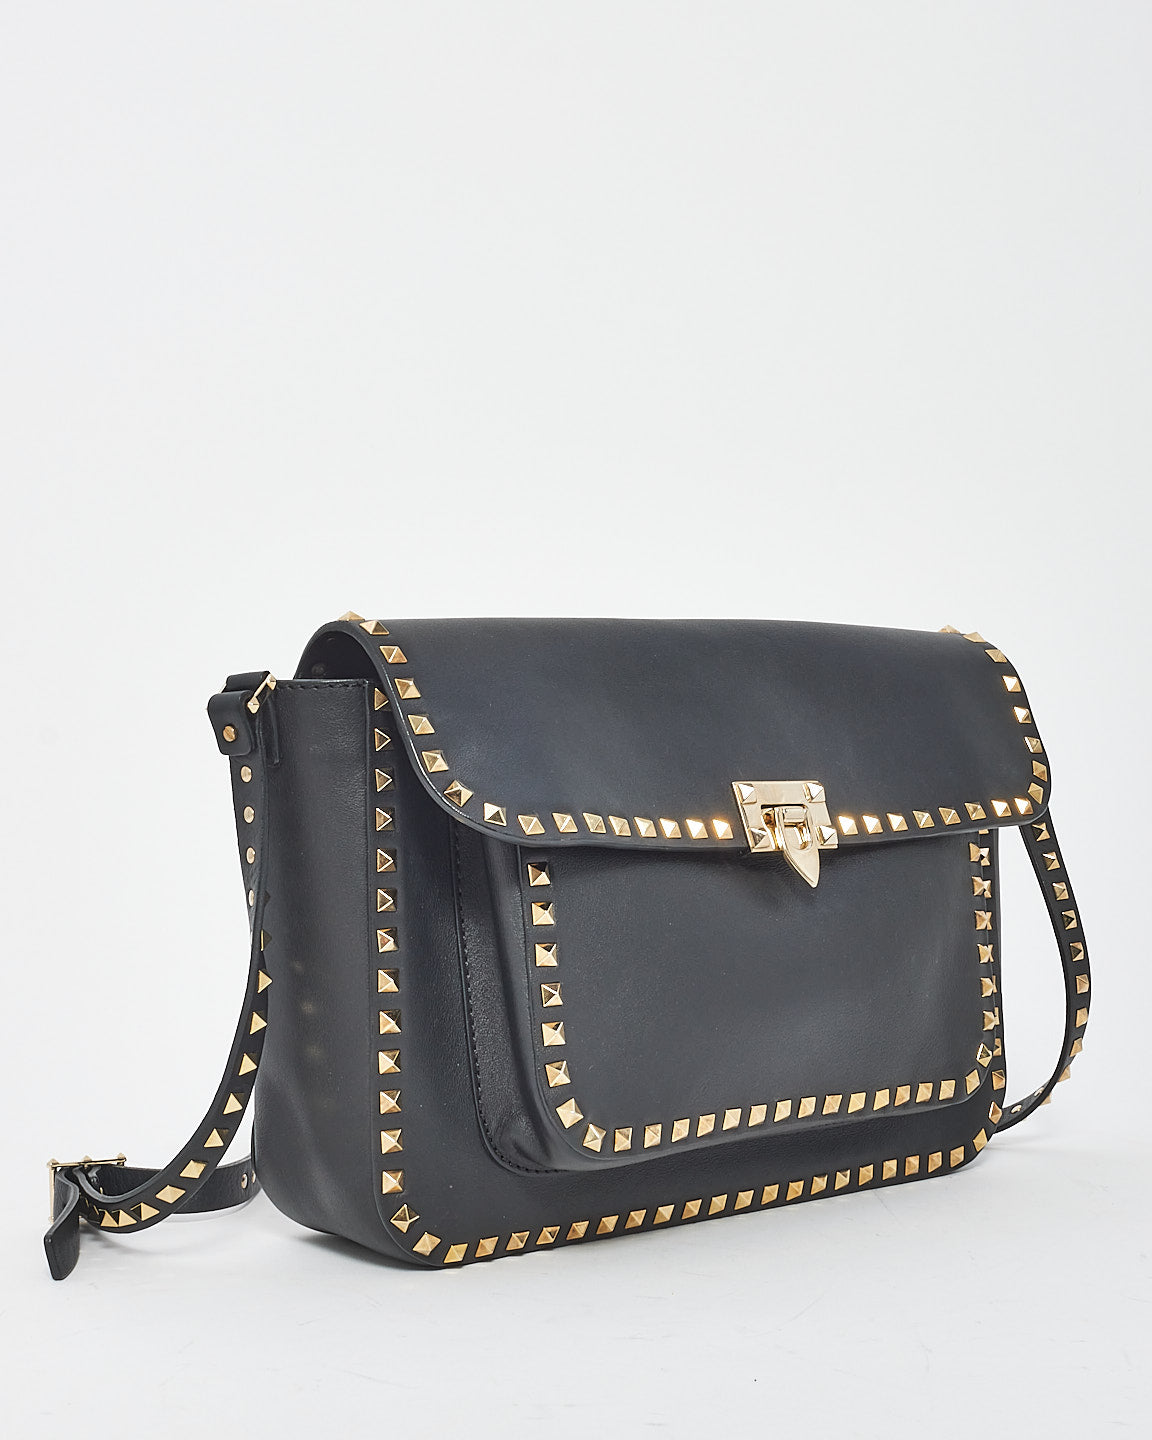 Valentino Black Leather Front Pocket Flap Rockstud Crossbody Bag